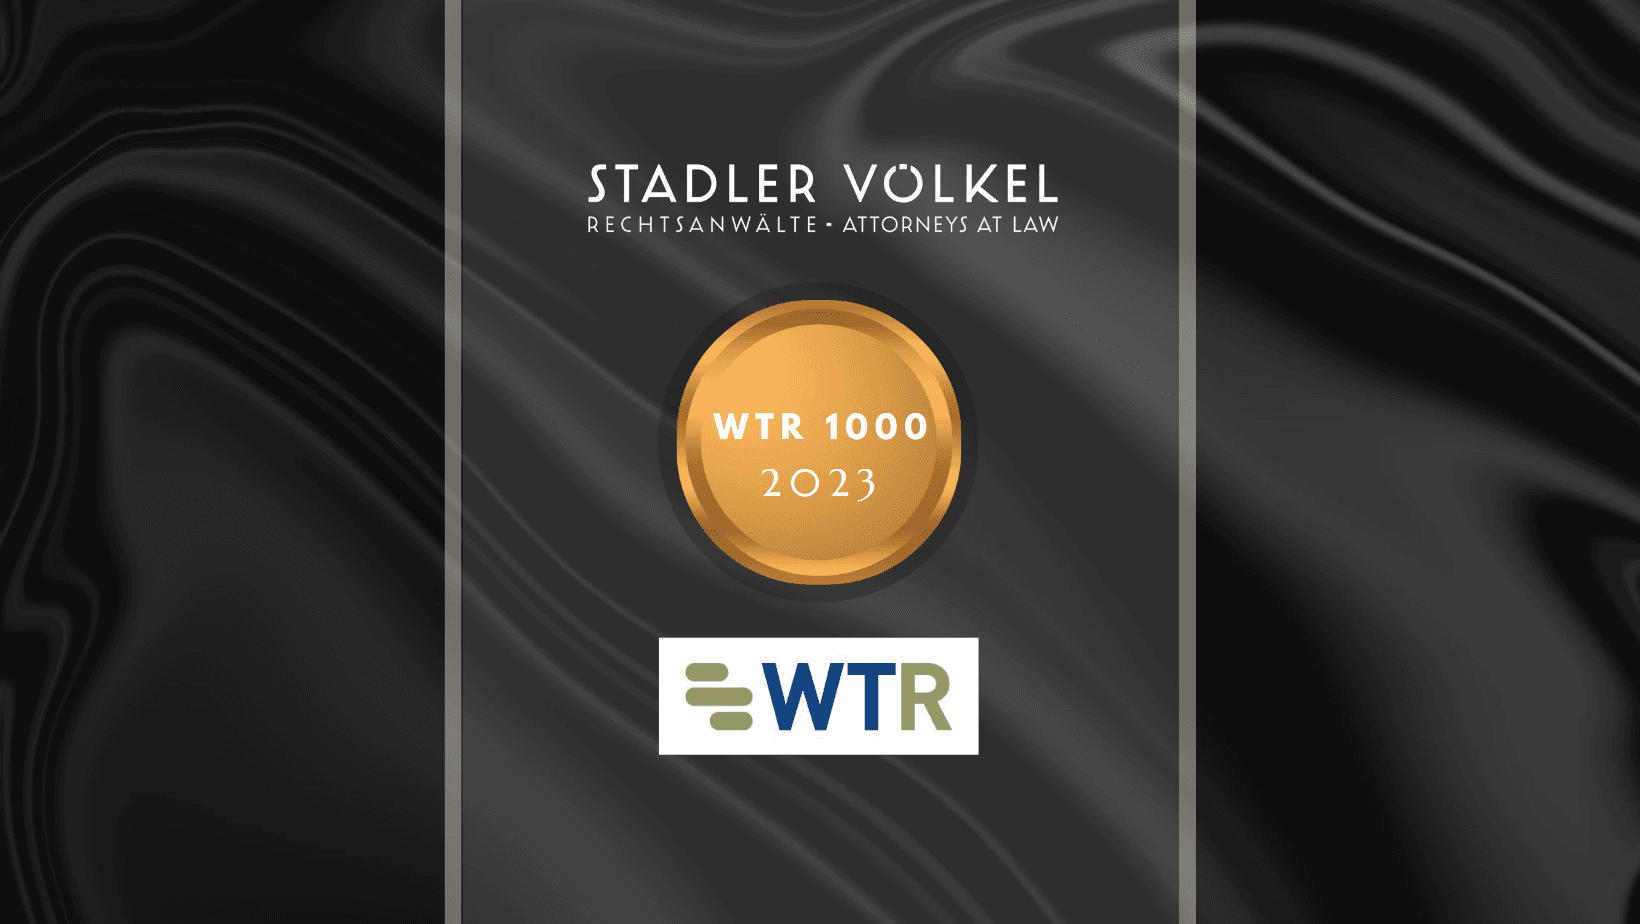 WTR 1000 - 2023 - STADLER VÖLKEL listed as one of the top trademark law firms in Austria (category BRONZE).